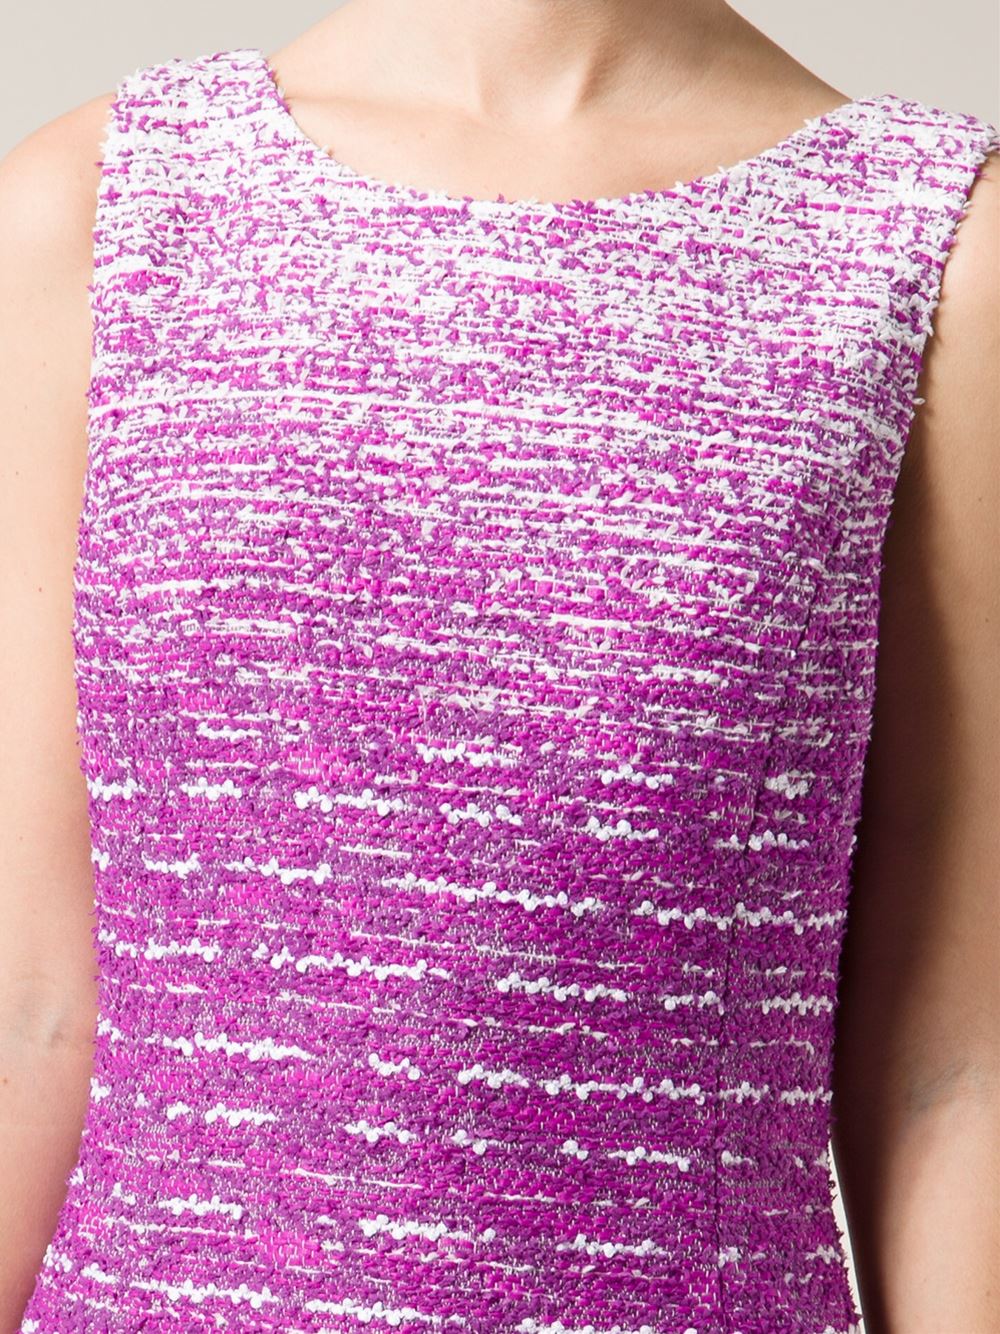 OSCAR DE LA RENTA-Textured Tweed Pencil Dress-